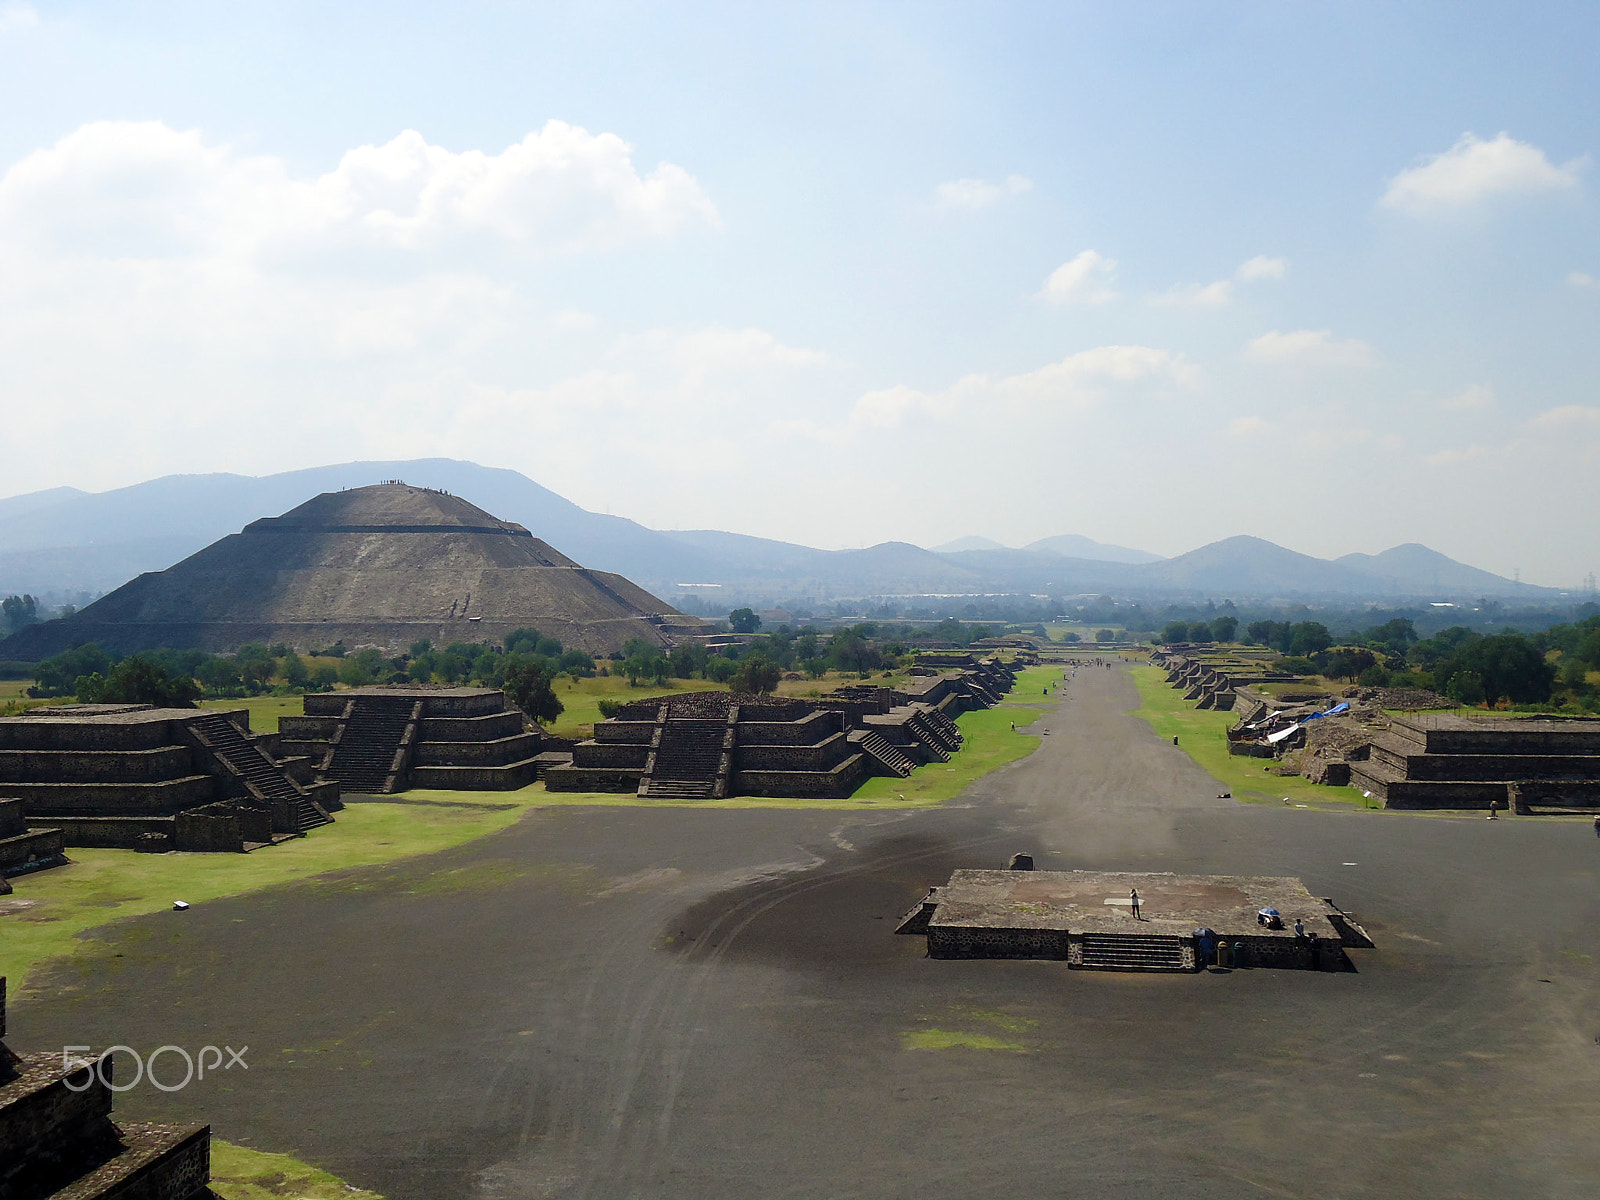 Sony Cyber-shot DSC-W530 sample photo. Zona arqueológica de teotihuacán, mexico photography